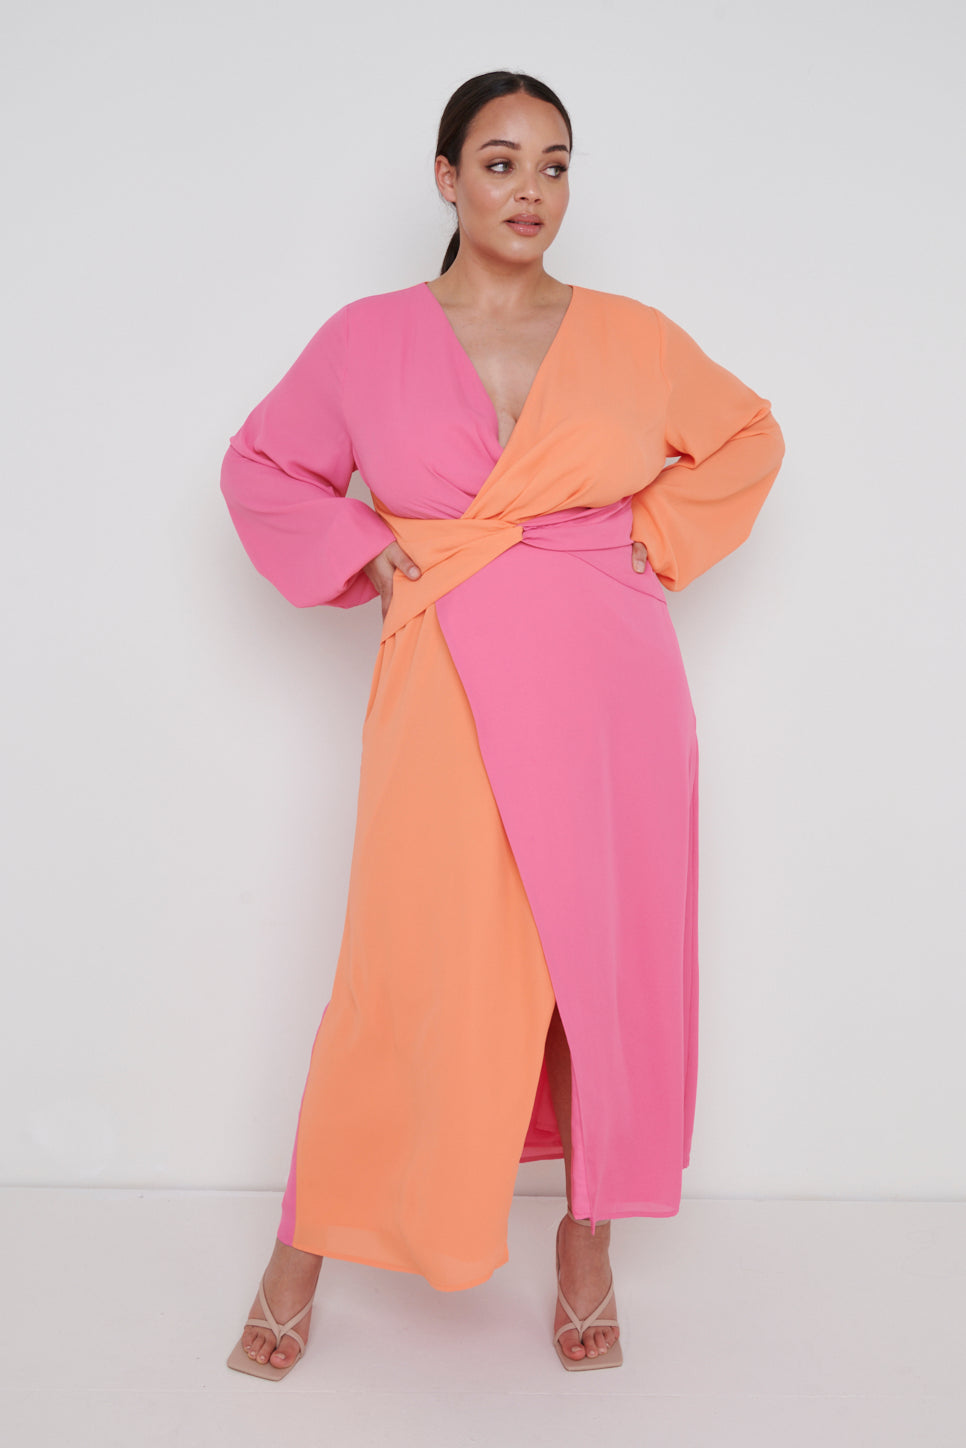 Frieda Knot Contrast Dress Curve - Orange et Rose